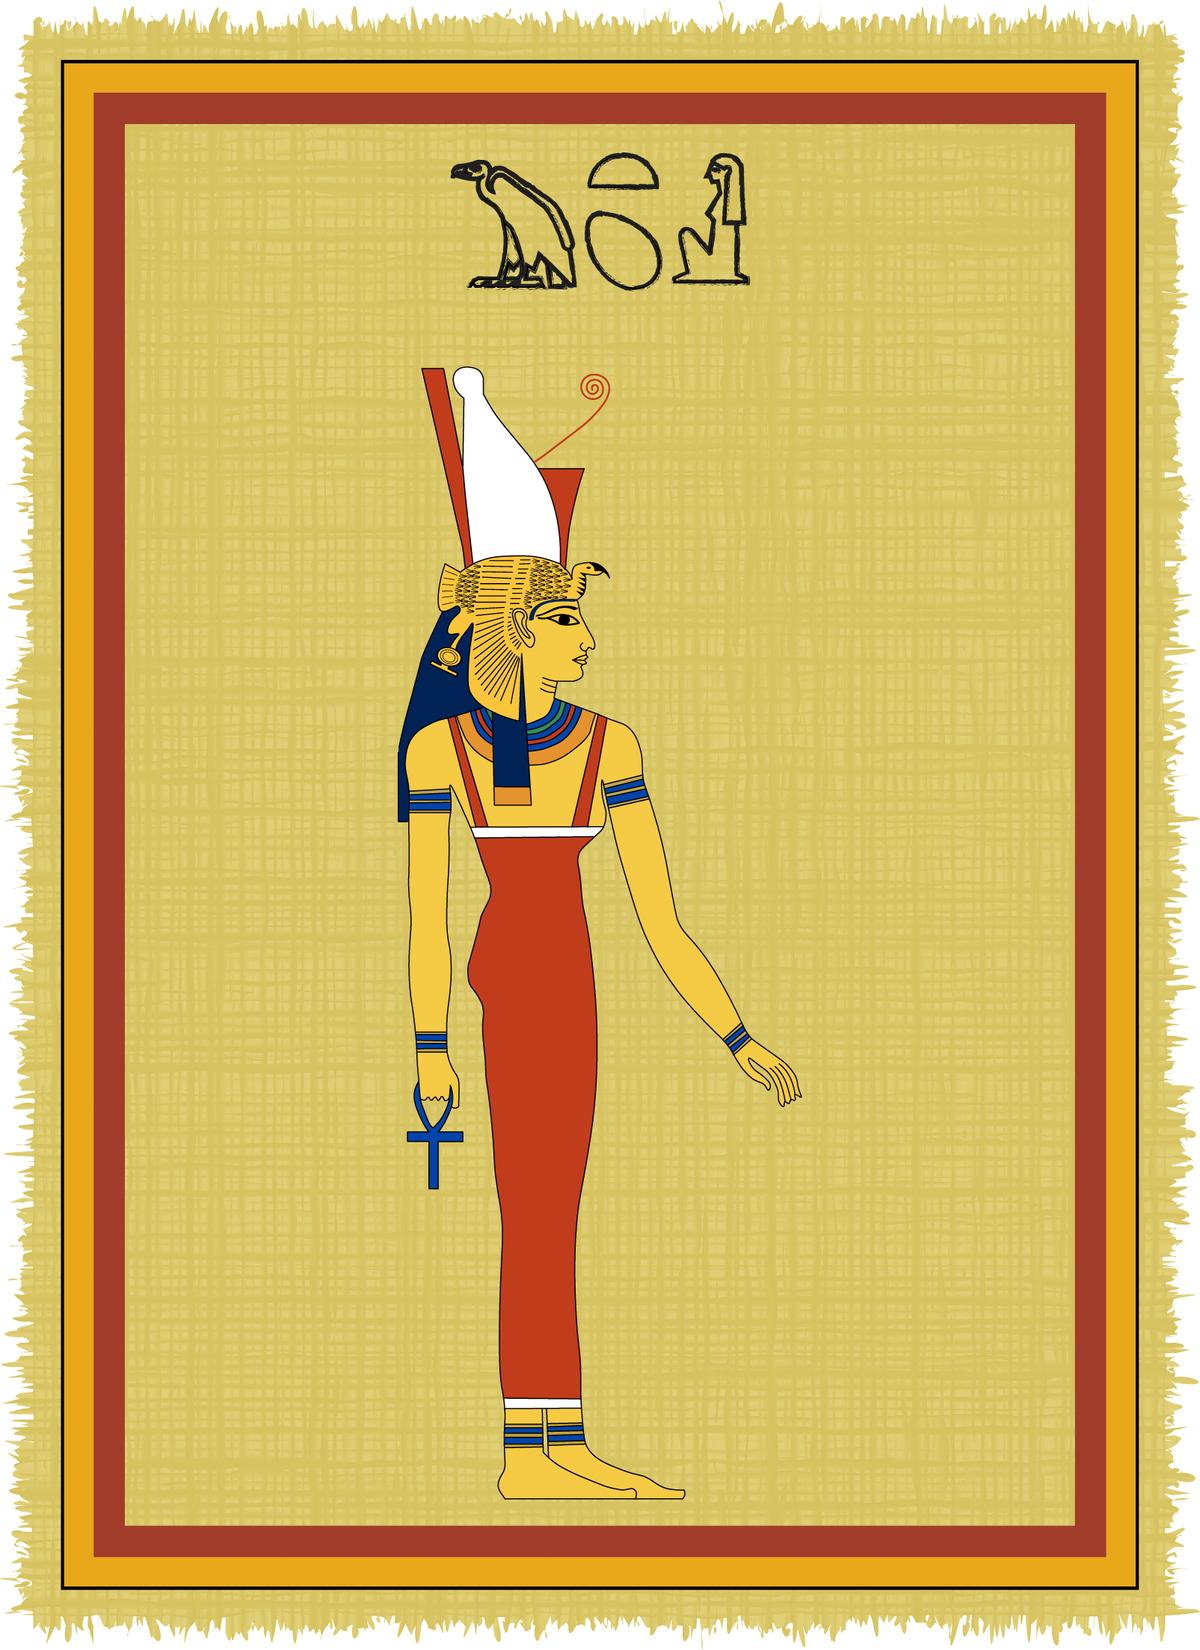 ©Shutterstock | <a href="https://www.shutterstock.com/image-vector/papyrus-image-mut-ancient-egyptian-goddess-790192315?src=oa0UxGElQ1OKWmcUULqgig-1-0&studio=1">AndreyO</a>